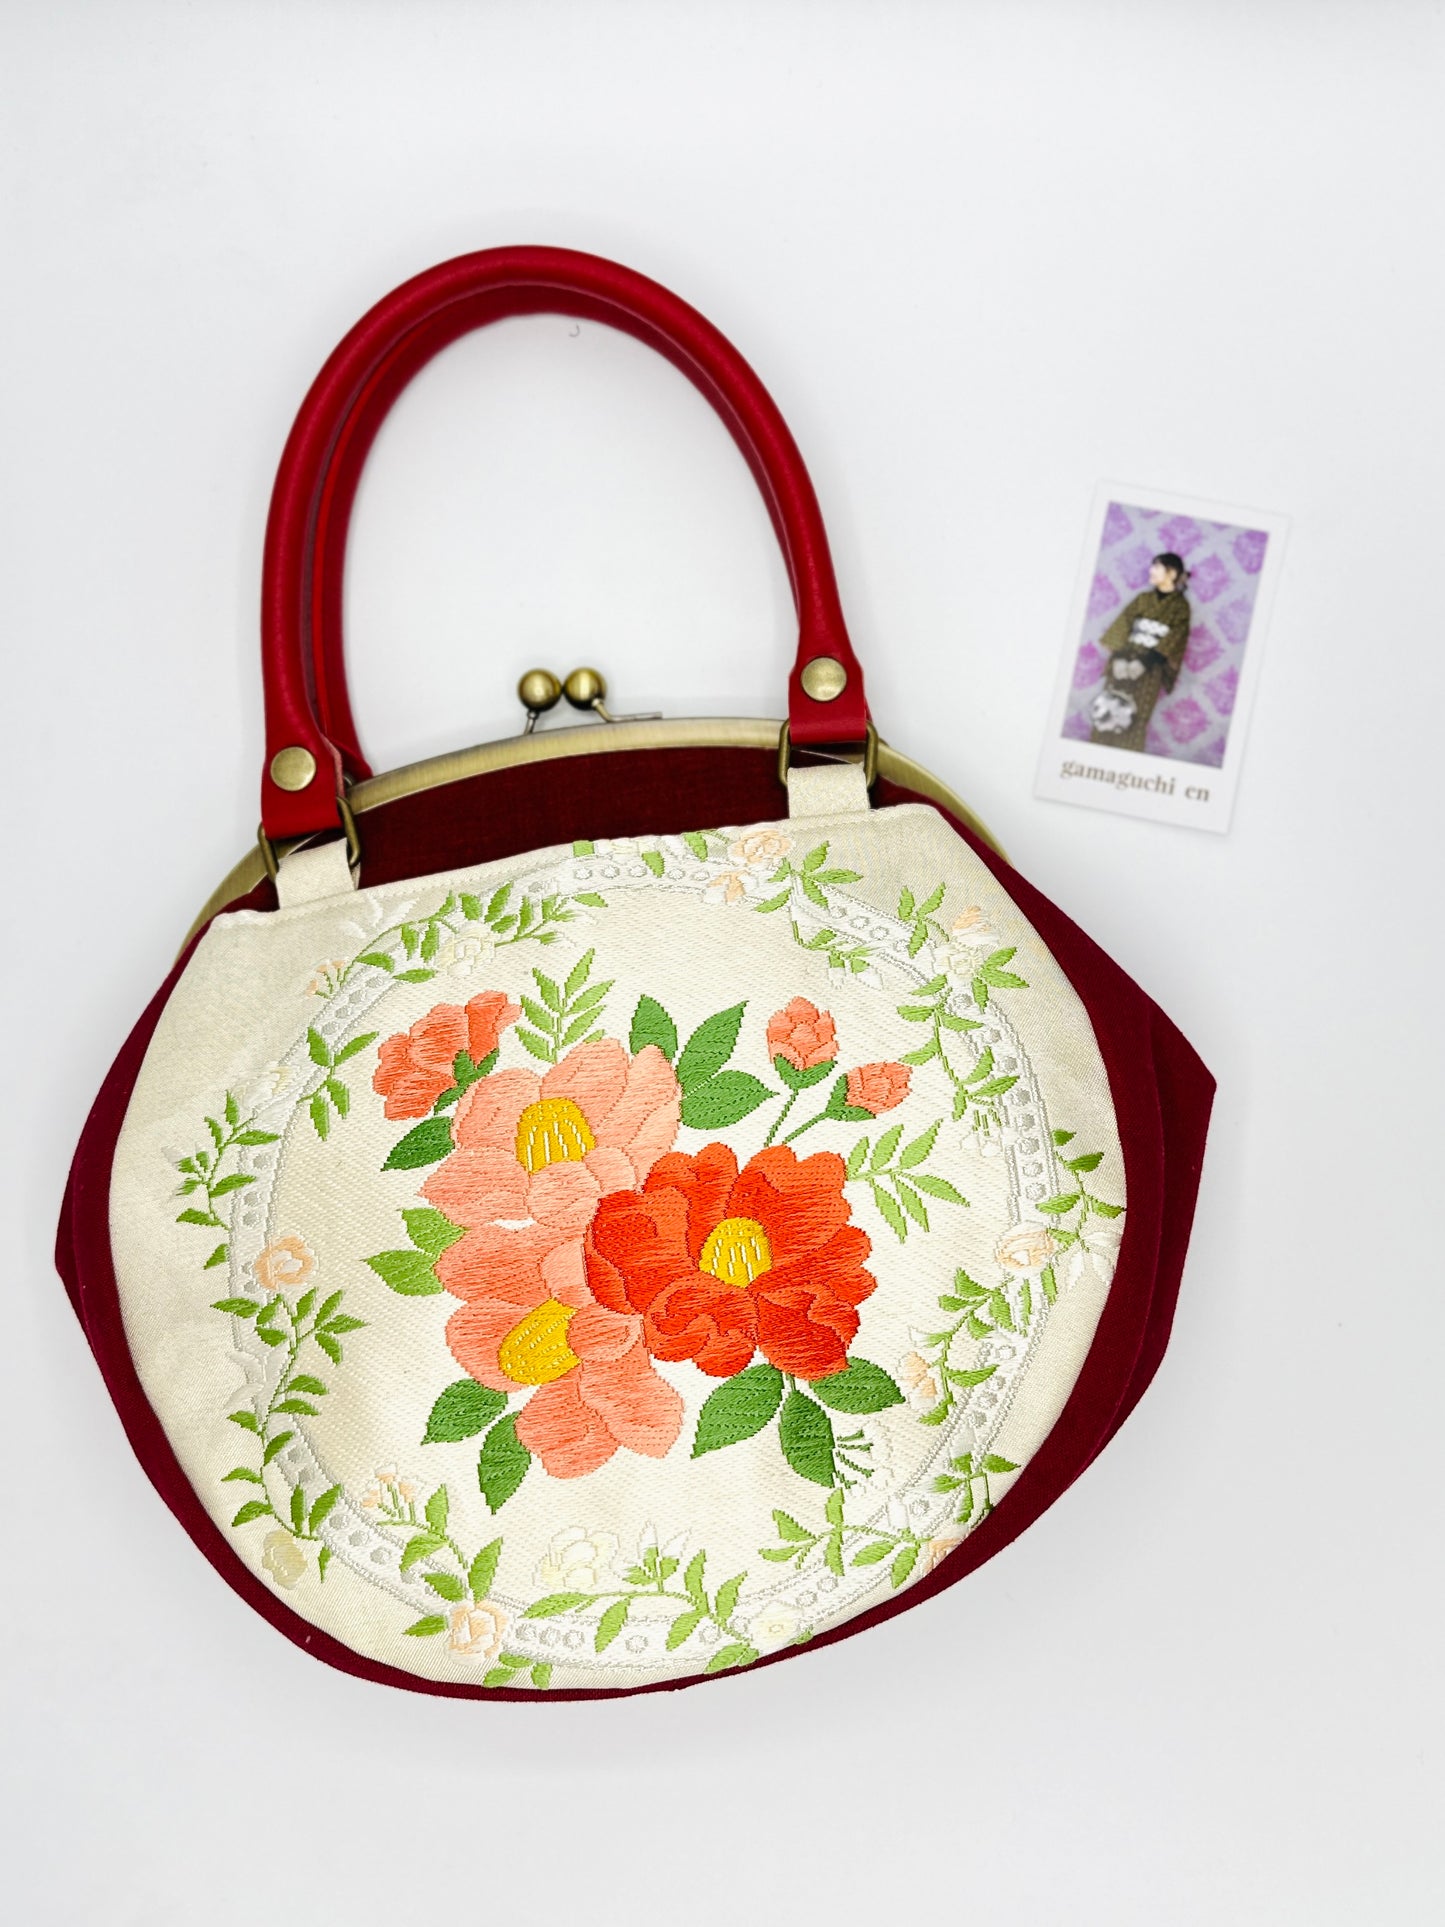 【Rot/Kamelie】 Gamaguchi-en/Handtasche, Kupplung, Beutel, japanische Tasche, Umhängetasche, japanische Geschenke